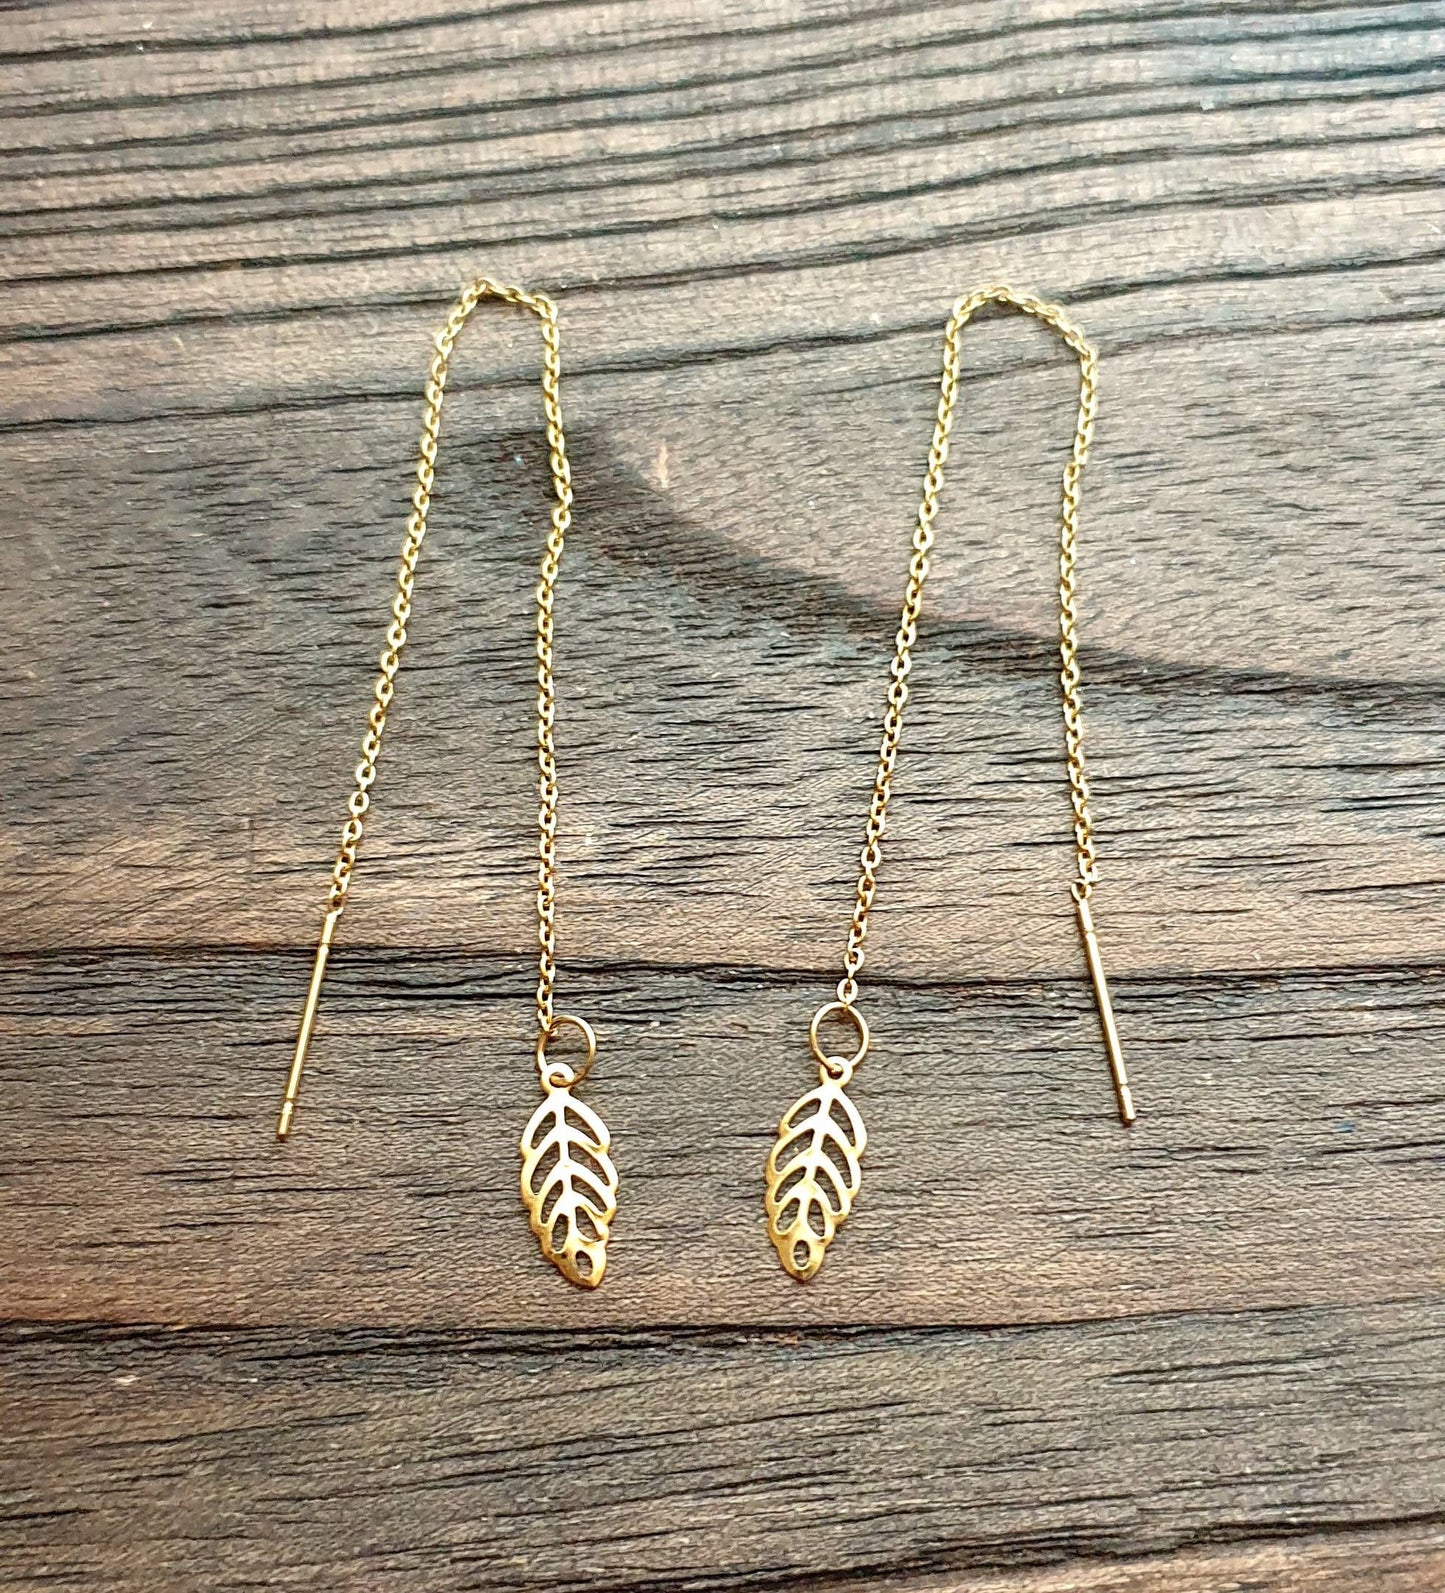 Tiny Leaf Gold Stainless Steel Dangle Thread Earrings, Threader, Hook, Leverback Earrings.